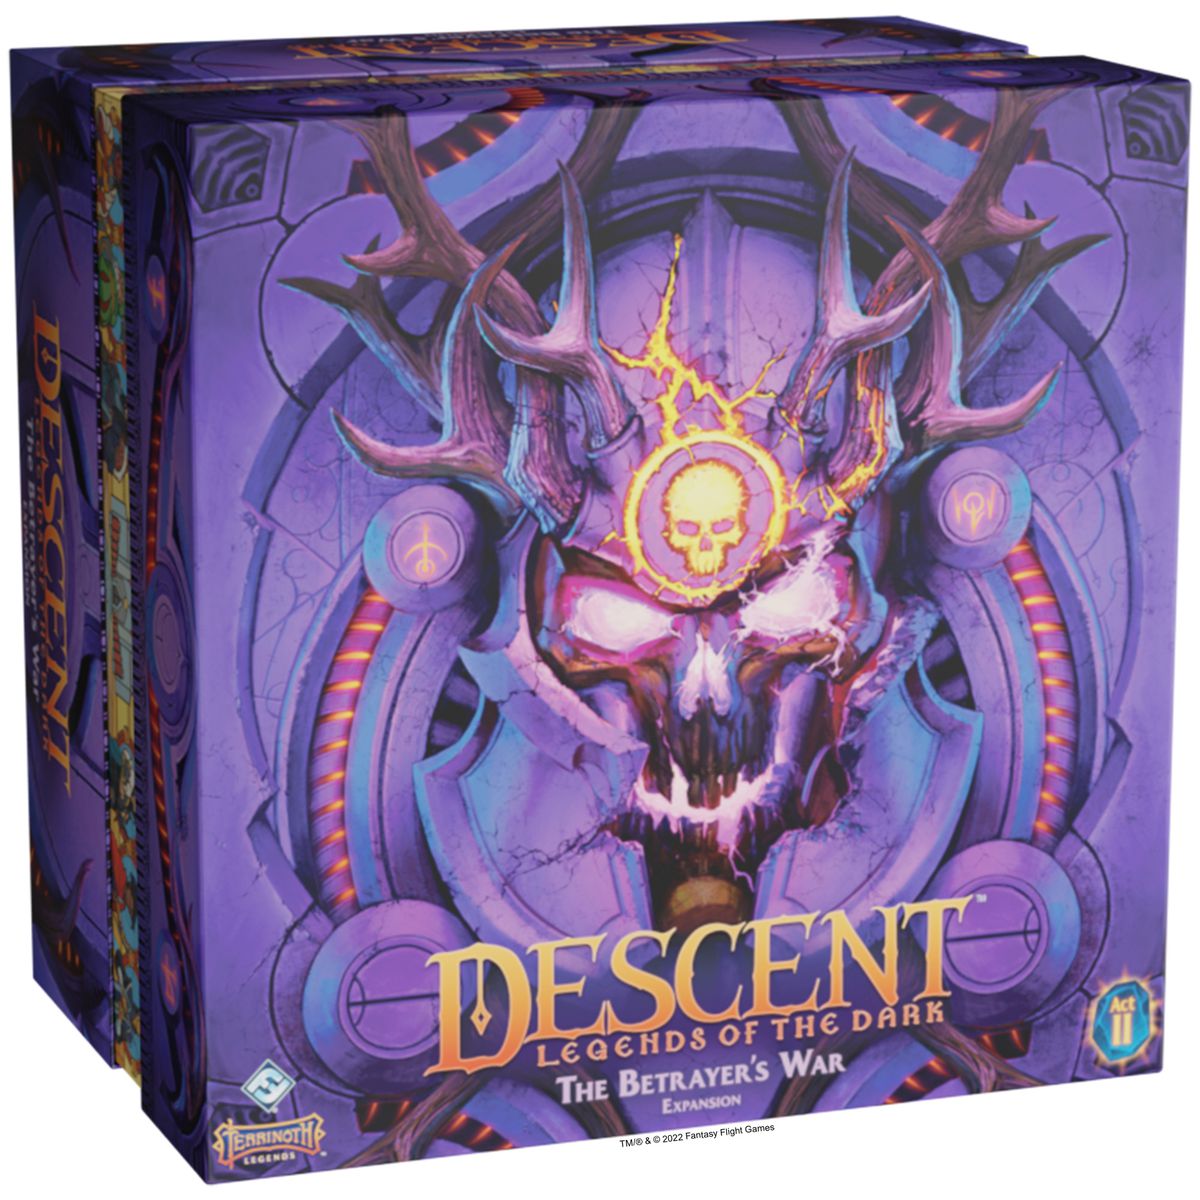 Un rendering della scatola viola per Descent Act 2: The Betrayer's War, un'espansione per Descent: Legends of the Dark.